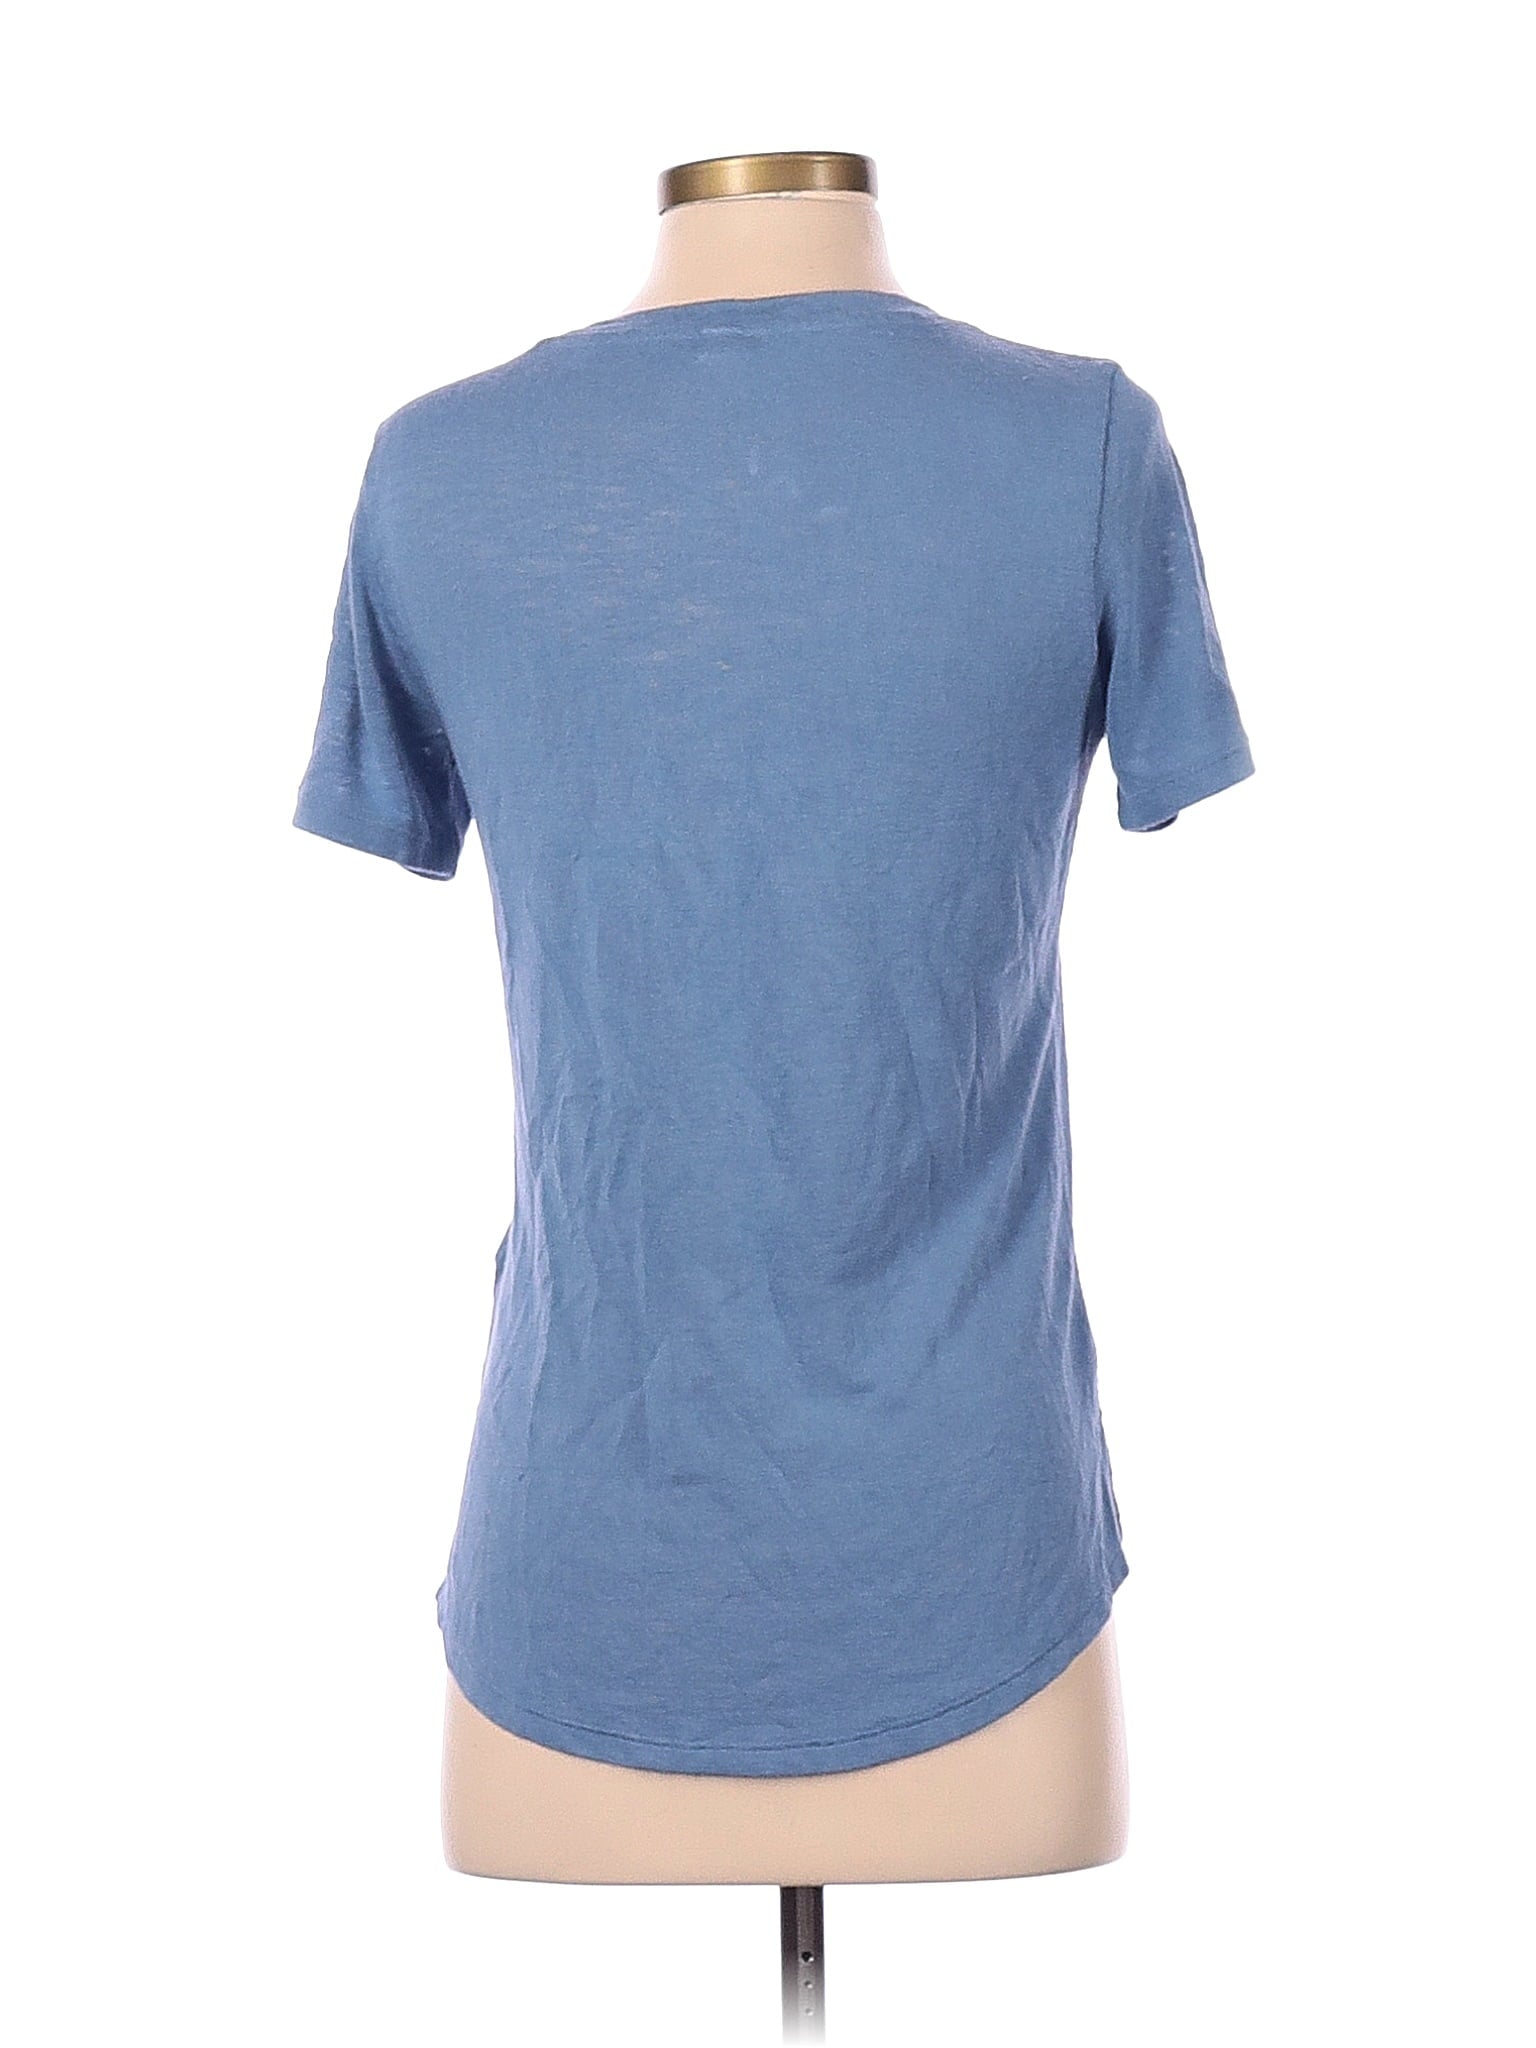 Short Sleeve T Shirt size - XS